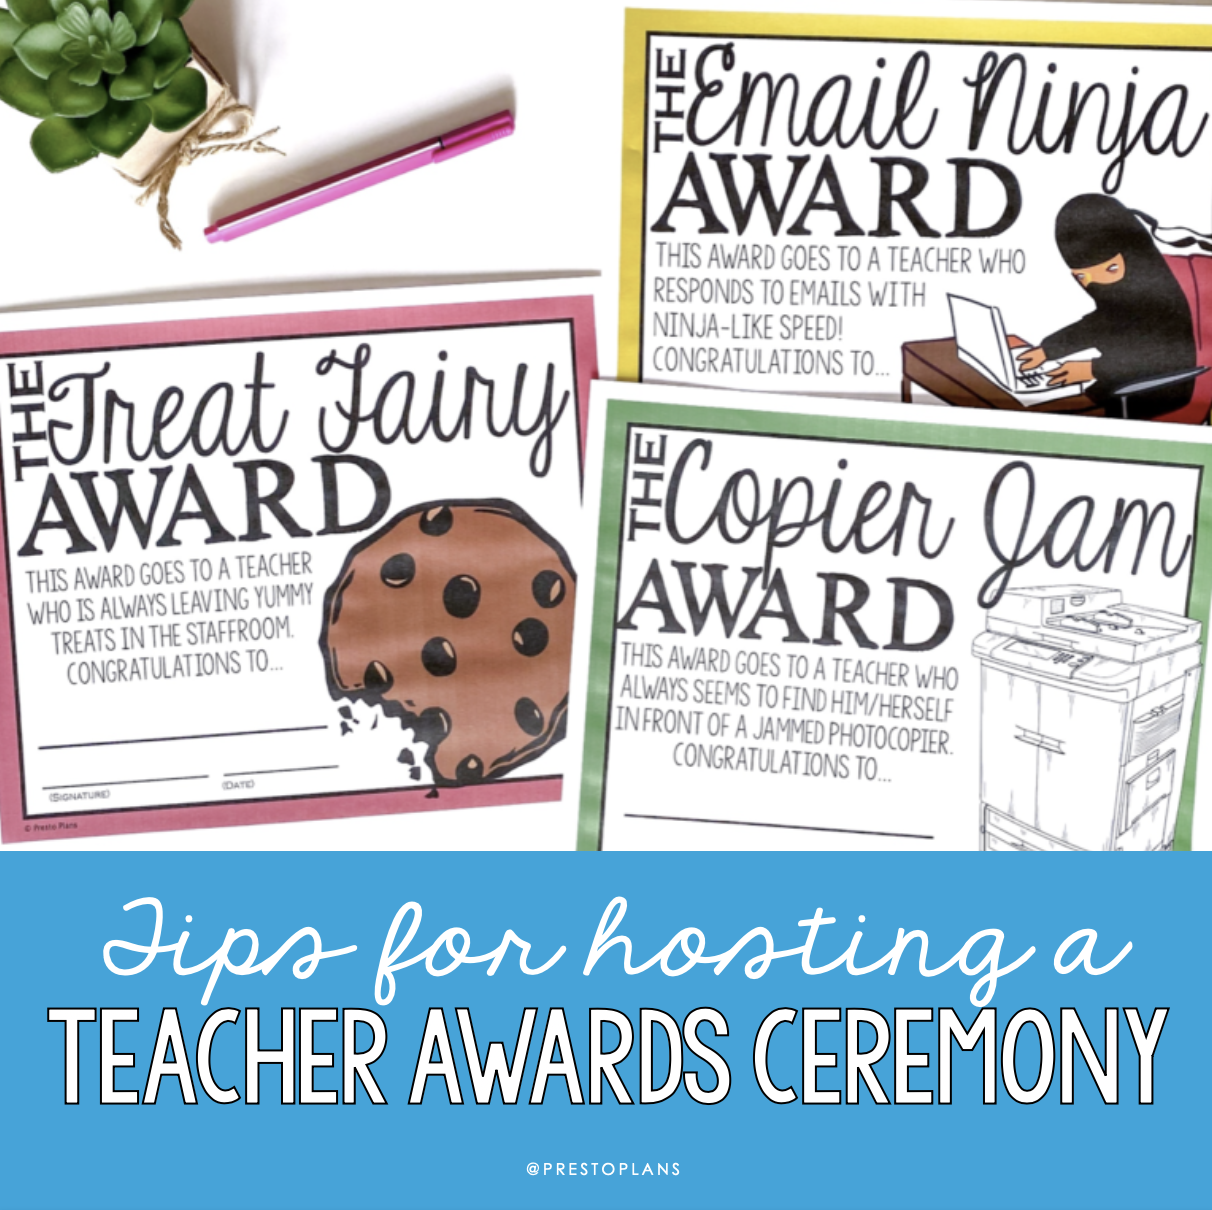 Tips for Hosting a FUN Teacher Awards Ceremony - Presto Plans